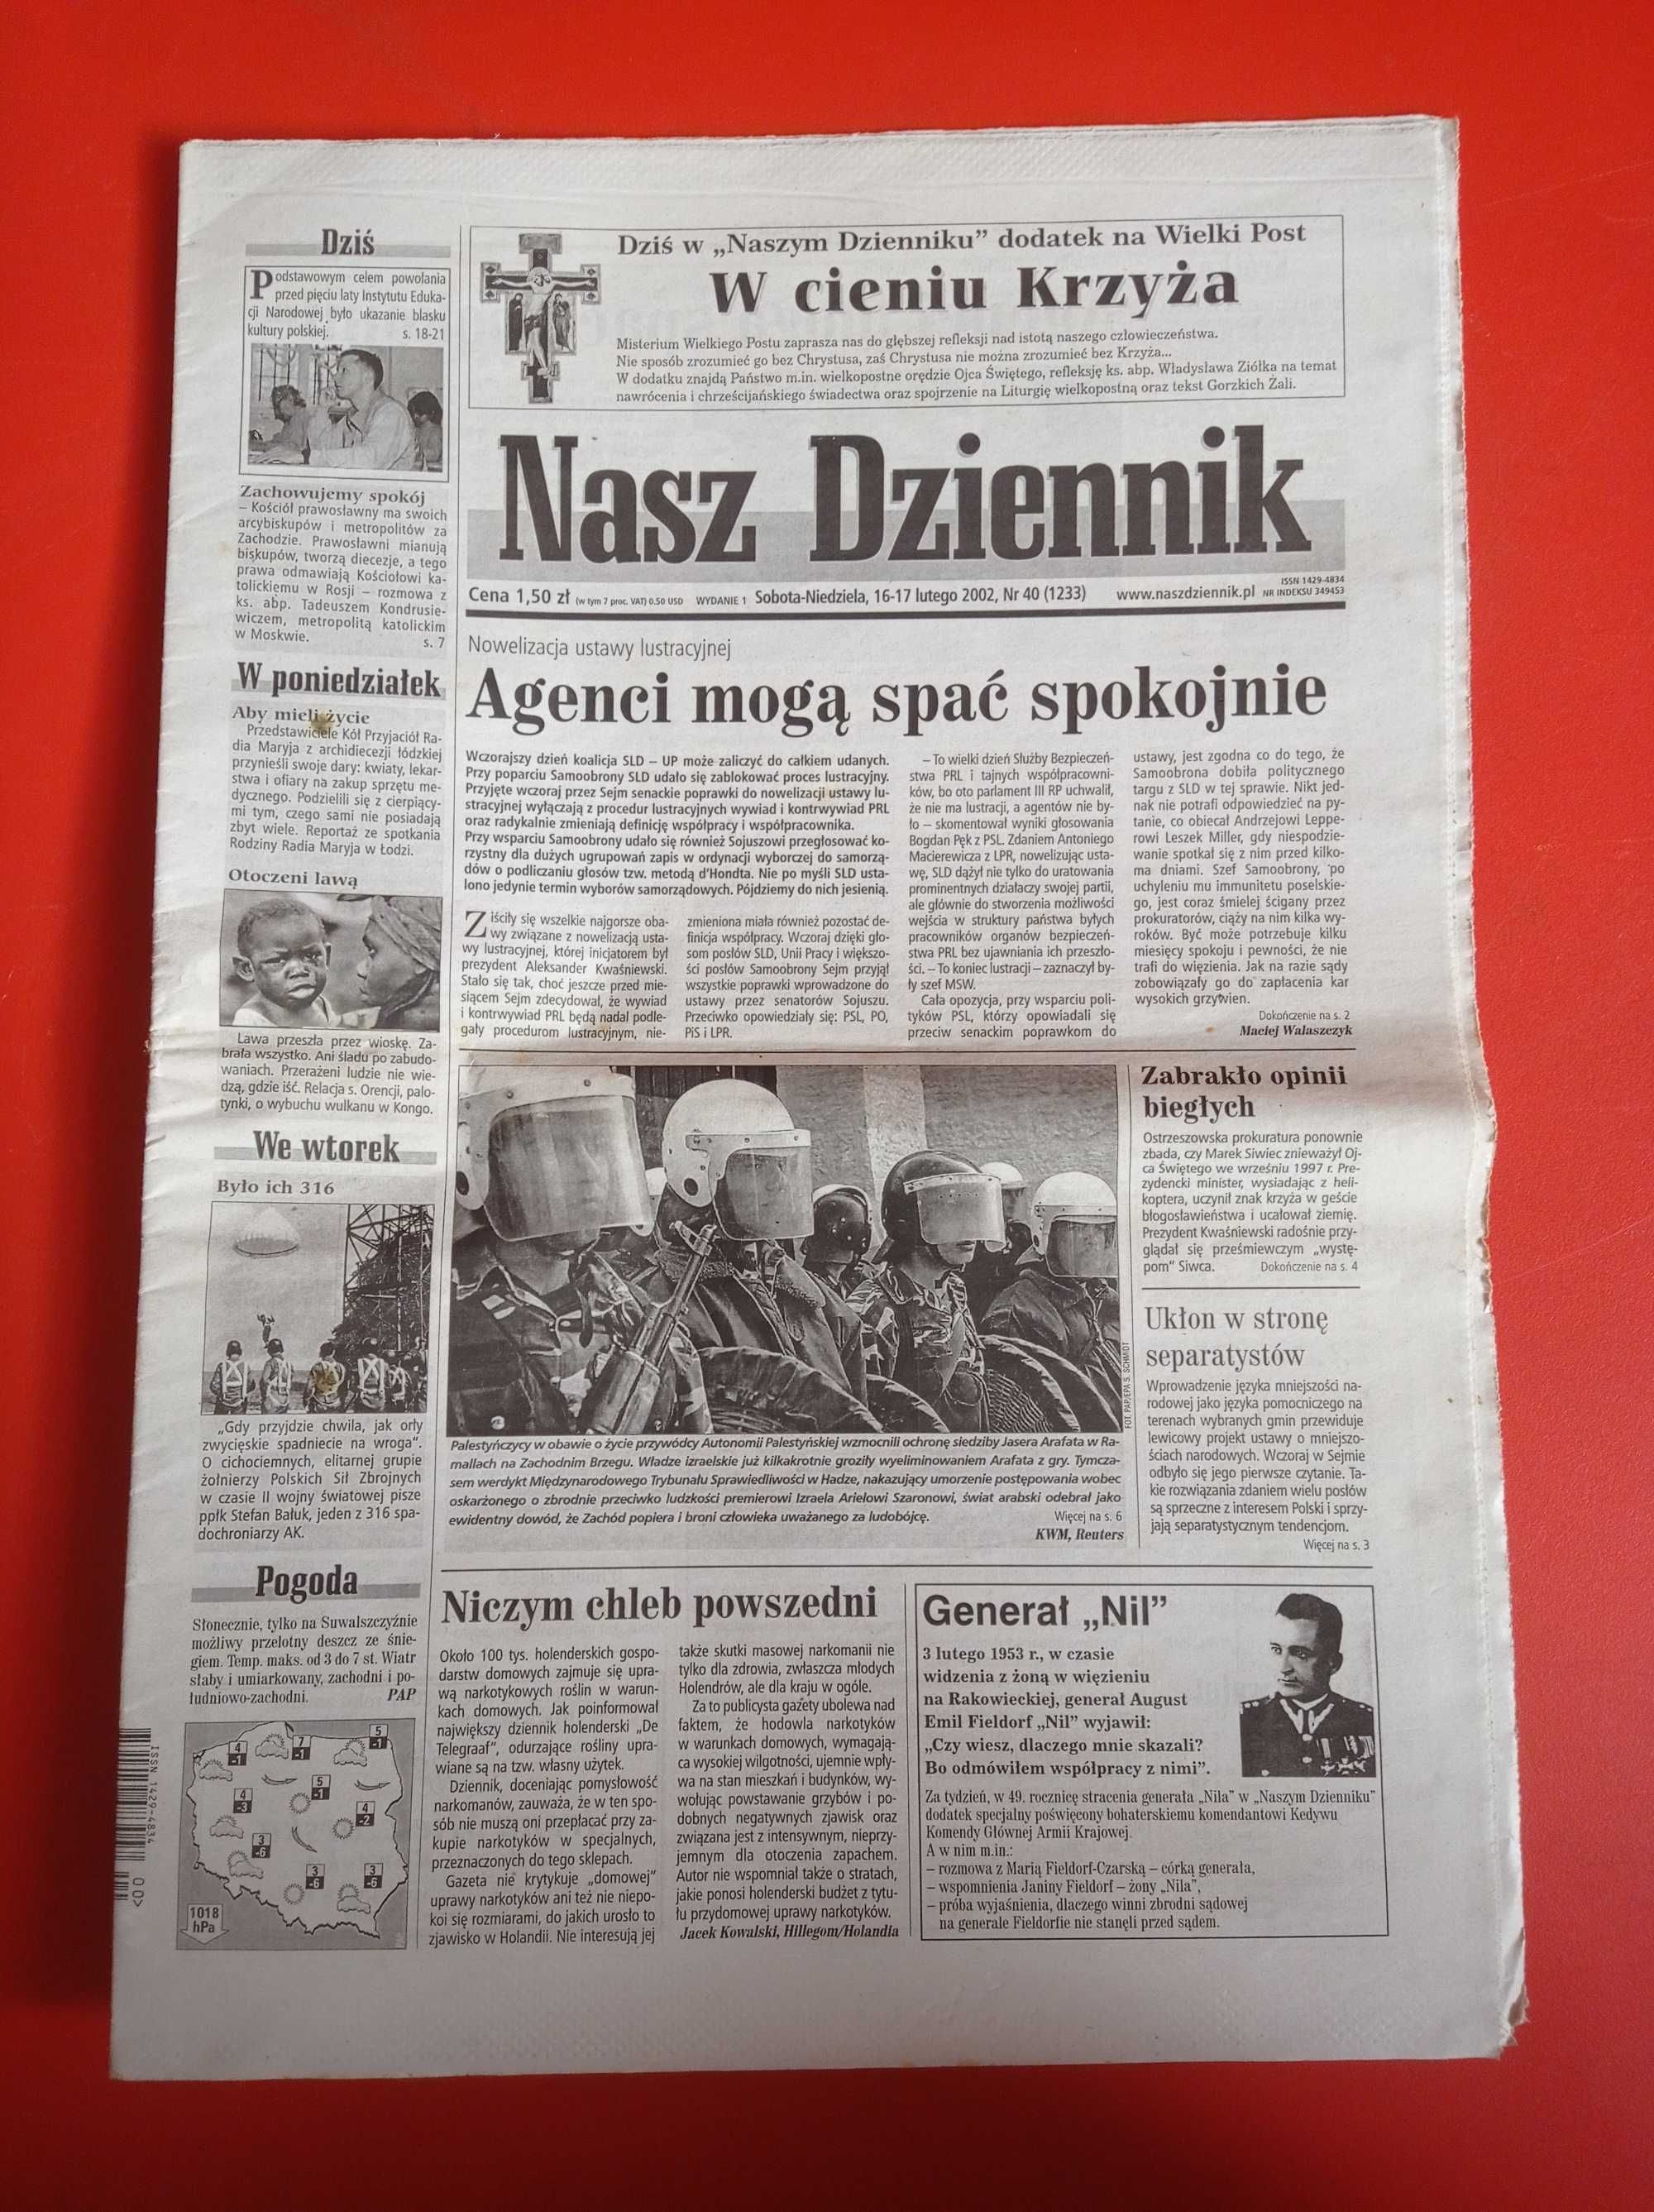 Nasz Dziennik, nr 40/2002, 16-17 lutego 2002